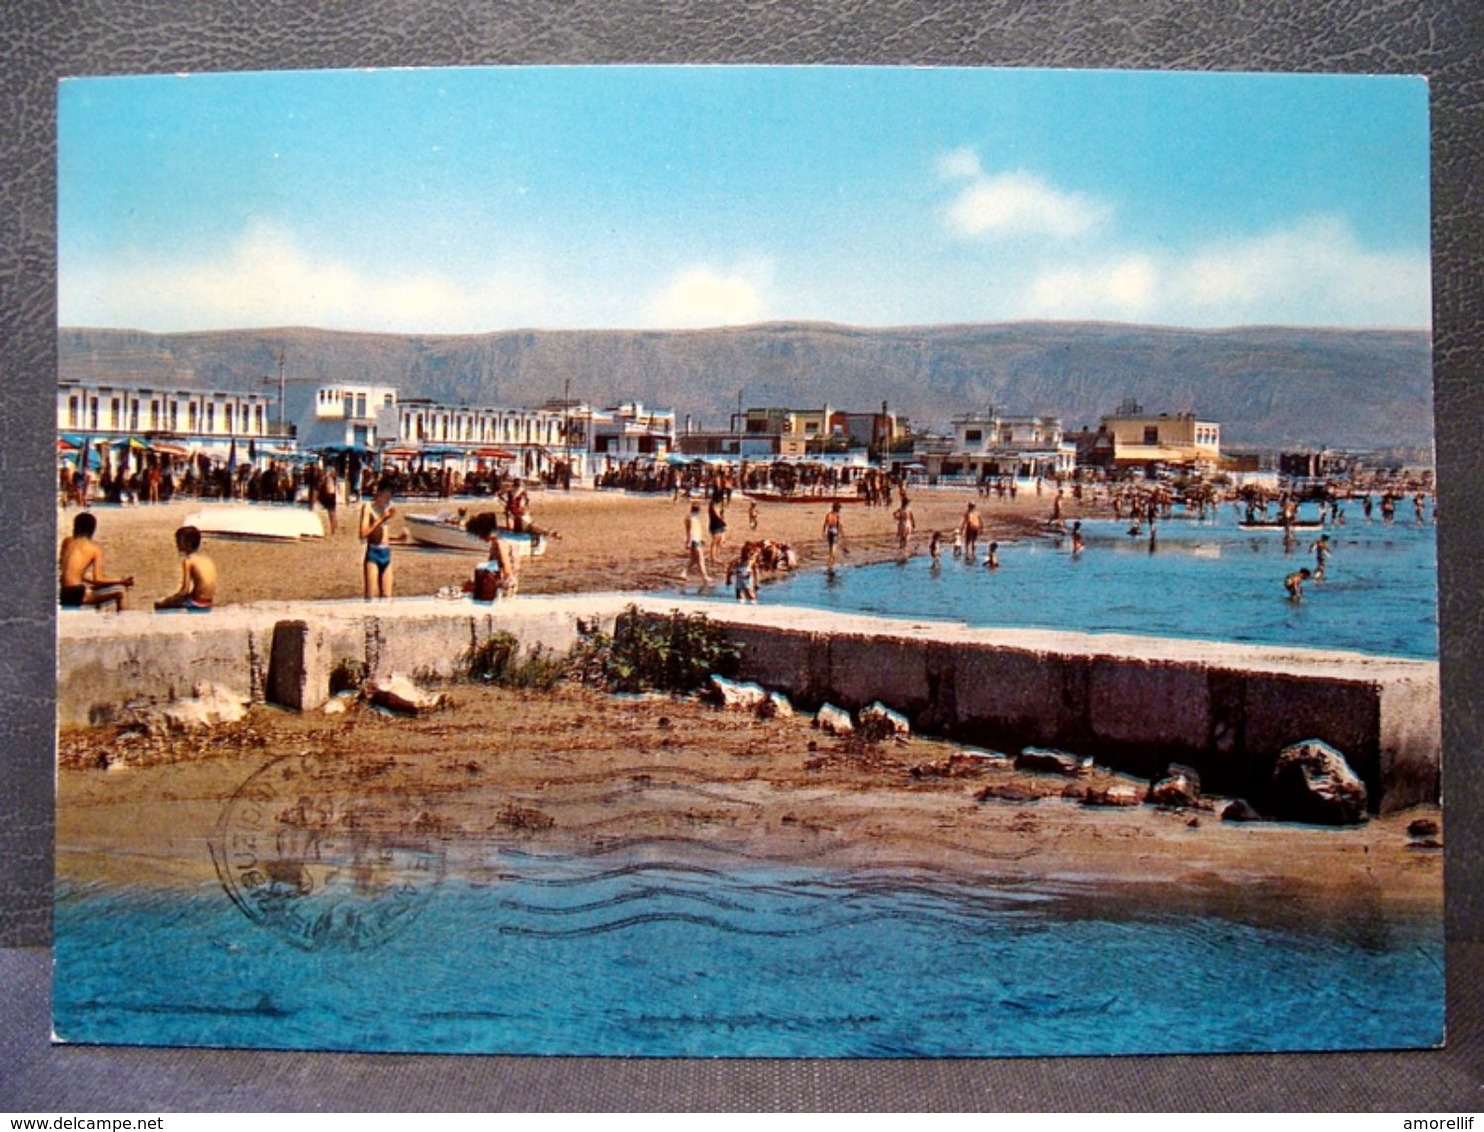 (FG.RR114) MANFREDONIA - LIDO DI SIPONTO - SPIAGGIA ANIMATA (FOGGIA) VIAGGIATA 1969 - Manfredonia